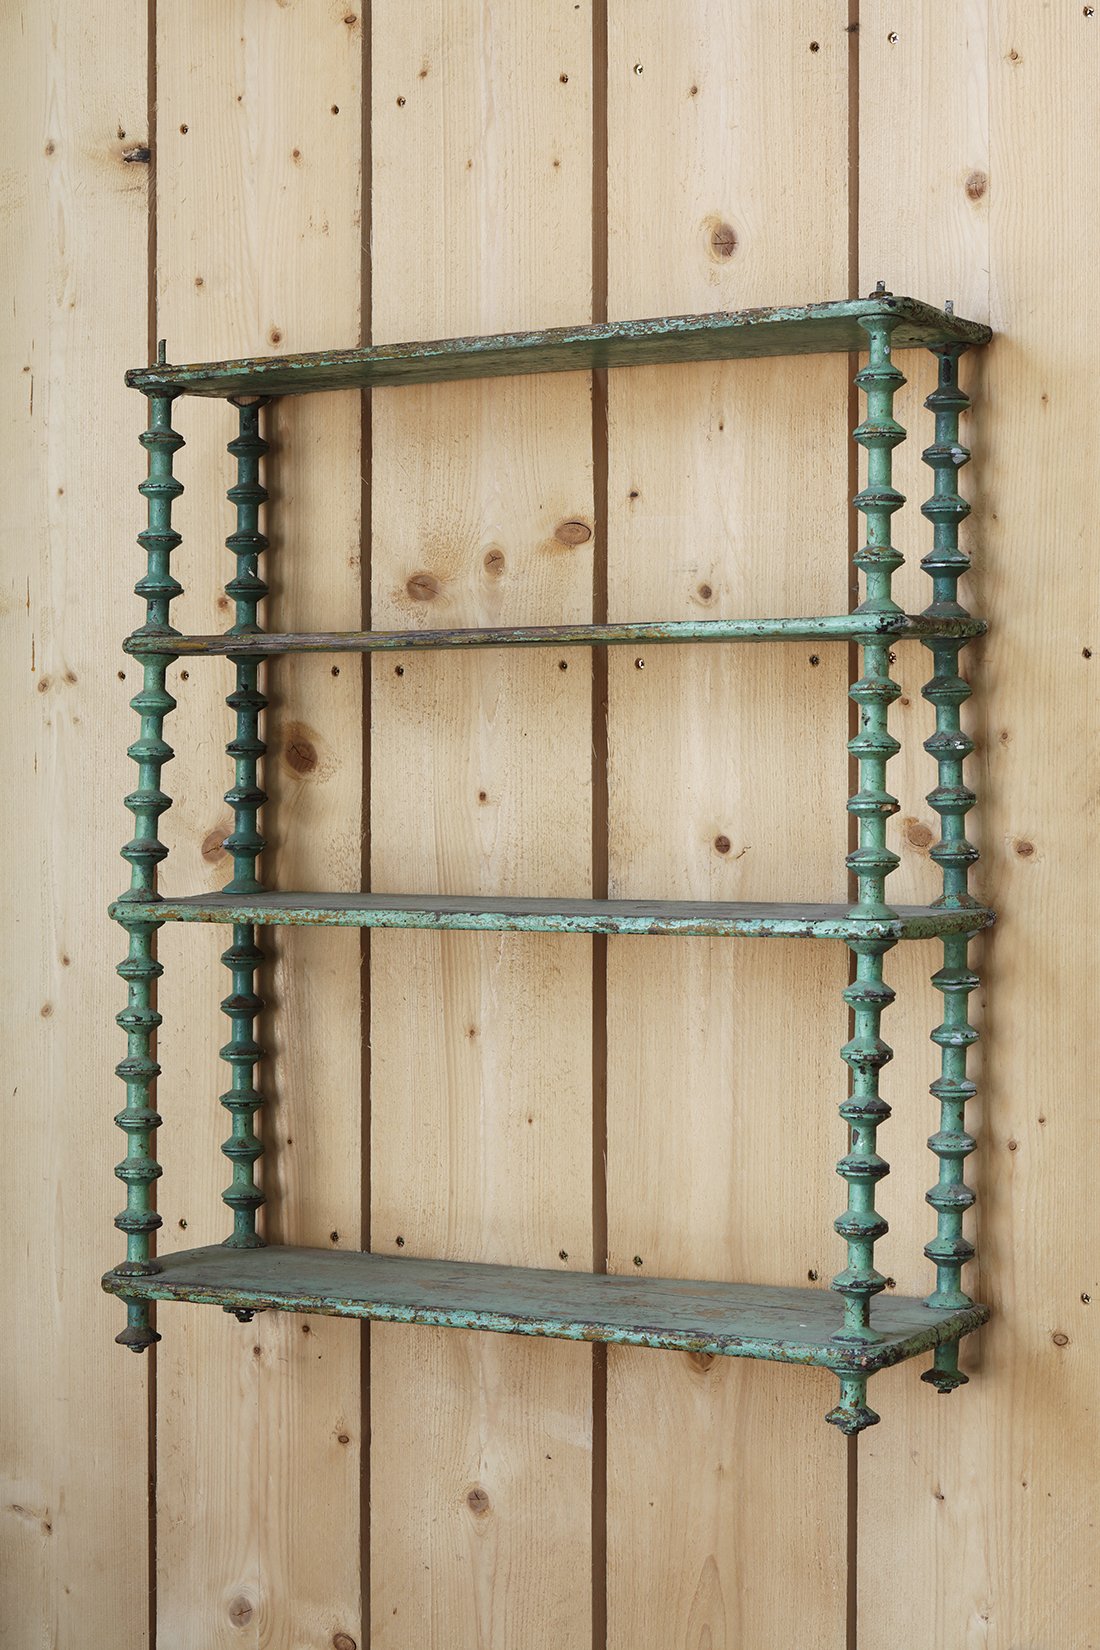 Green Cotton Reel Shelves